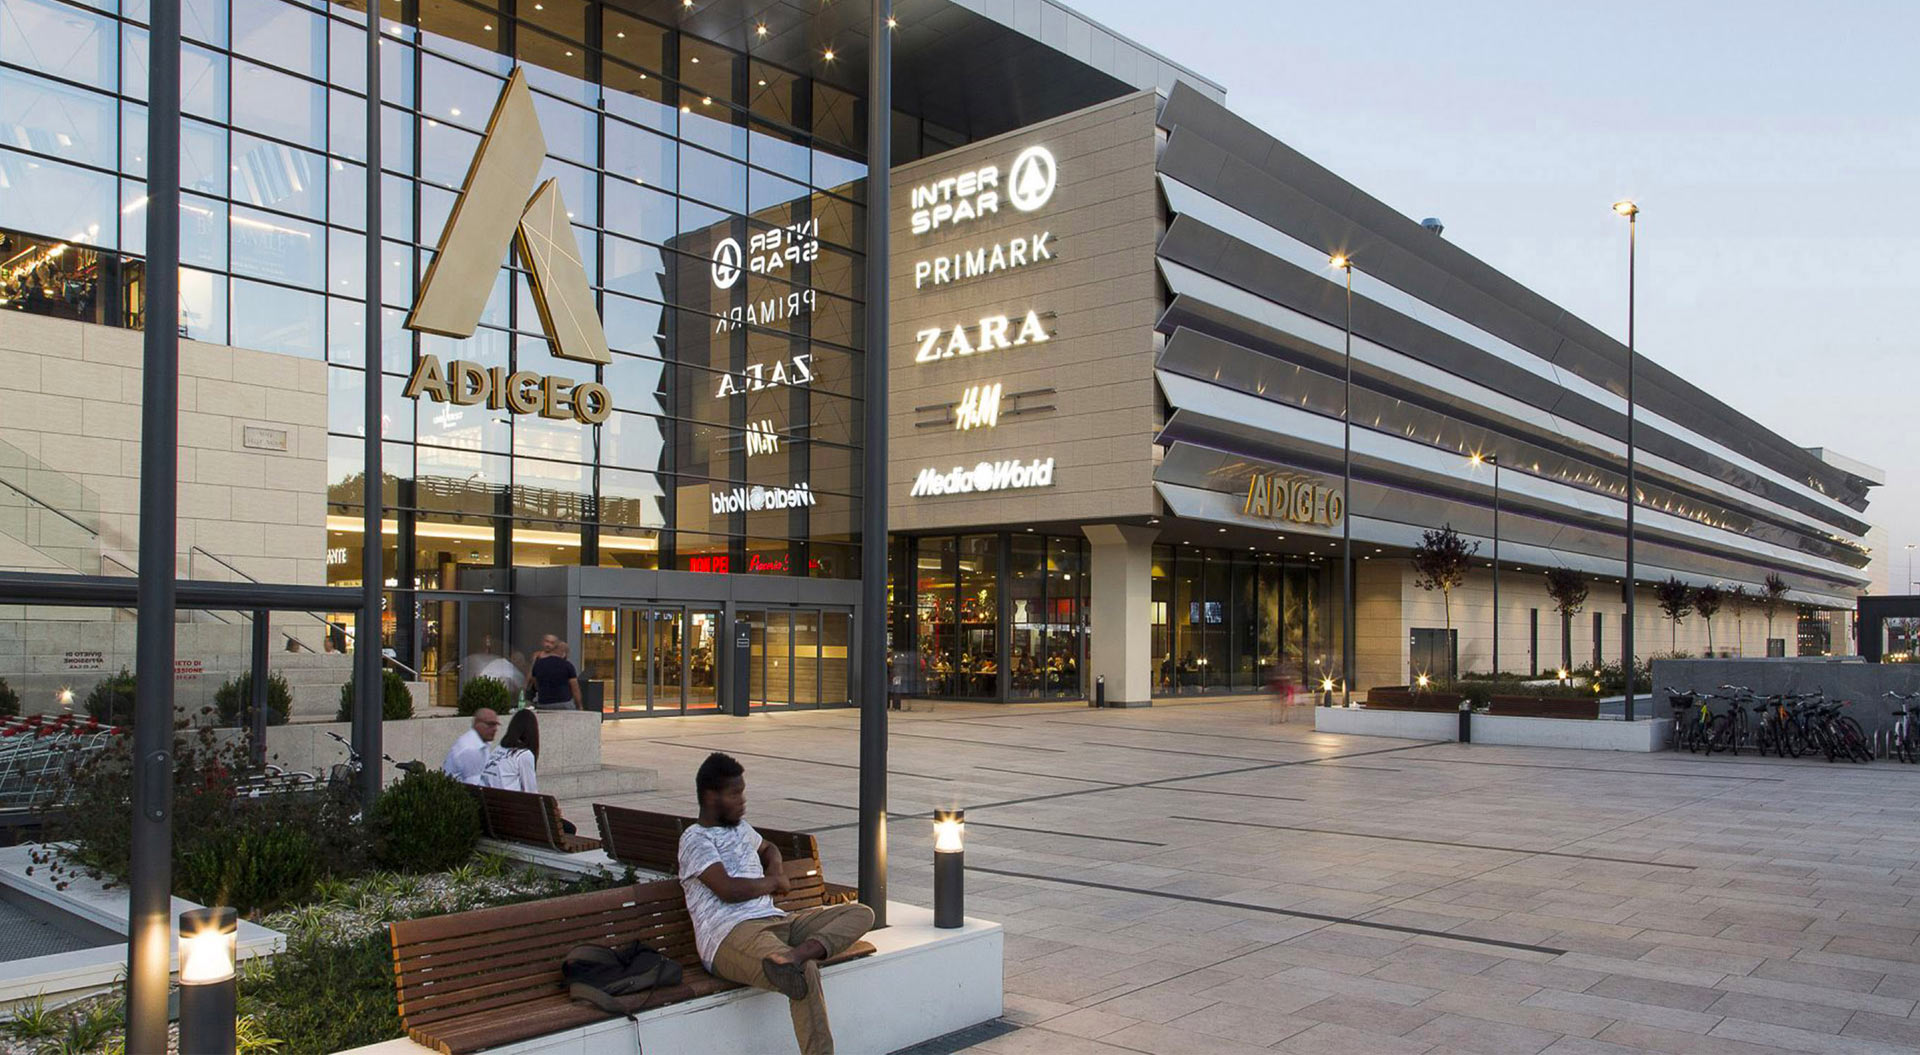 Shopping centre awards, innovation and cutting edge retail design - Adigeo, Verona, Italy